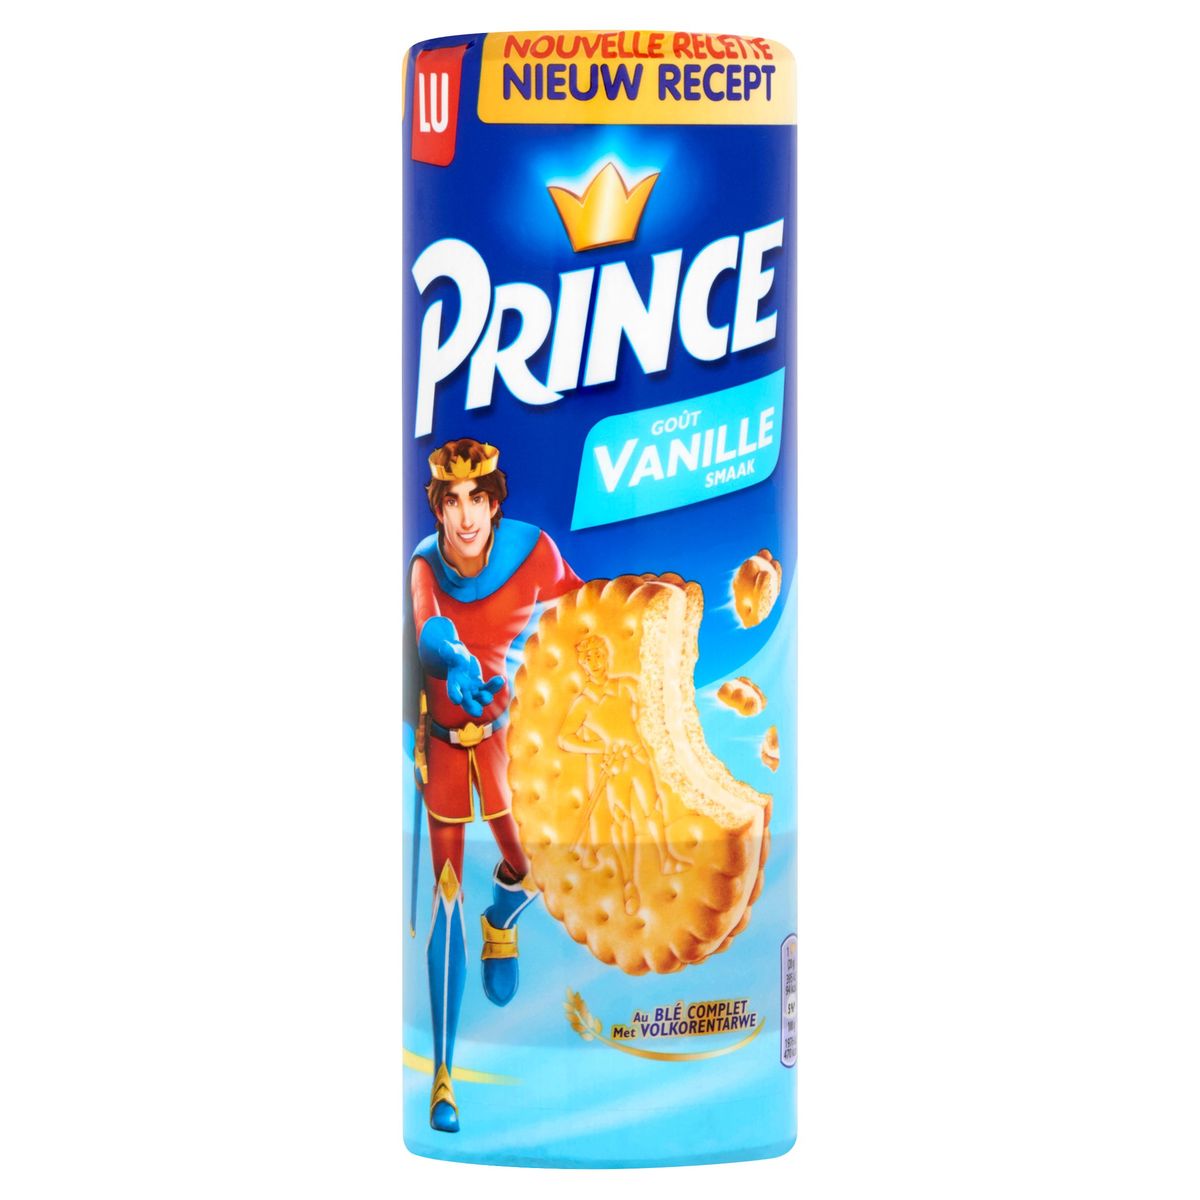 LU Prince Fourre Koekjes Vanille Smaak 300 g